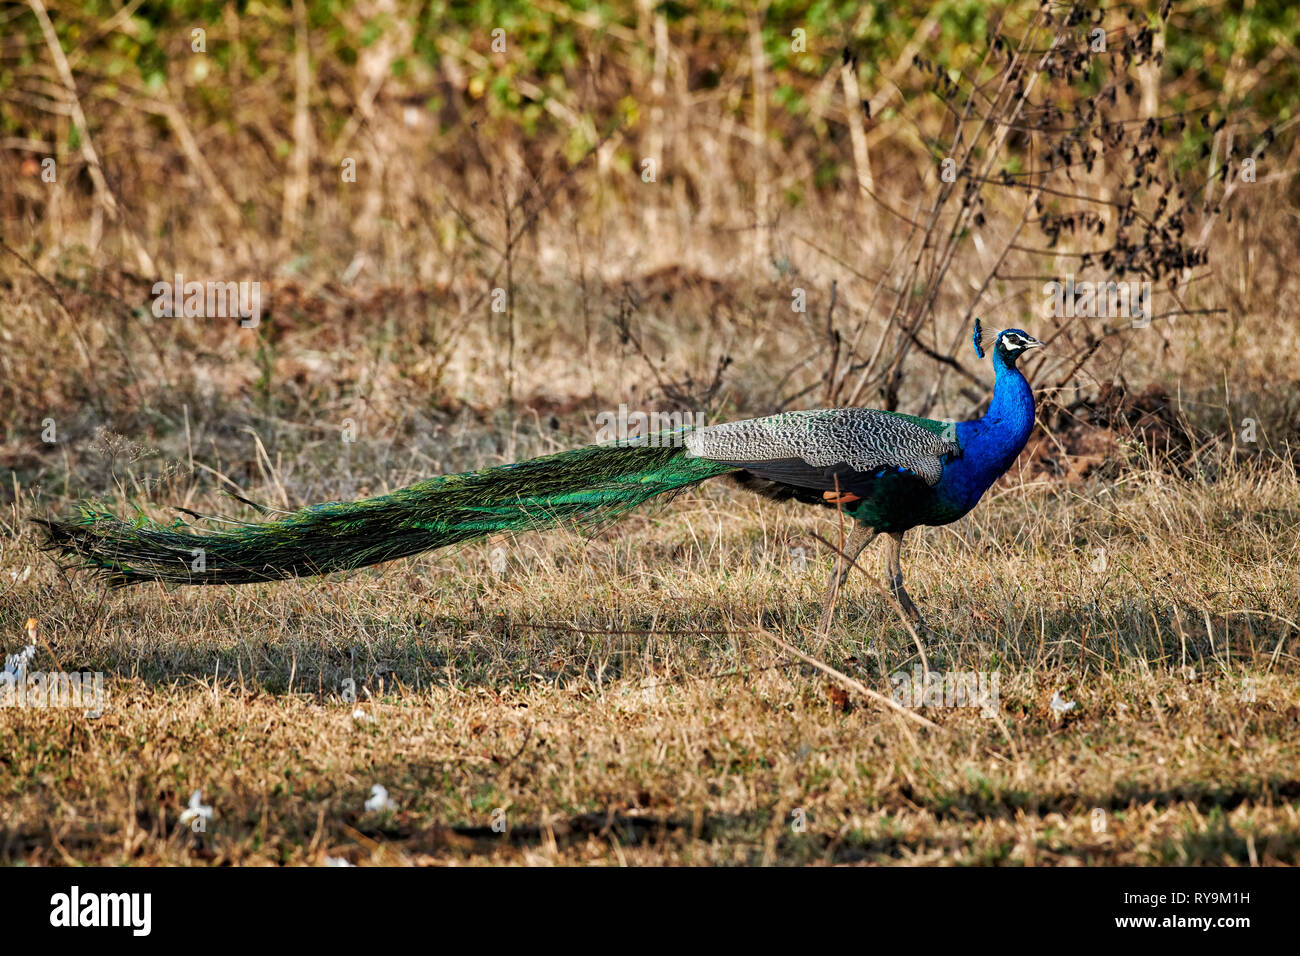 Peacock, commune ou paons Indiens paons bleus, Pavo cristatus, Bandipur Tiger Reserve, Karnataka, Inde Banque D'Images